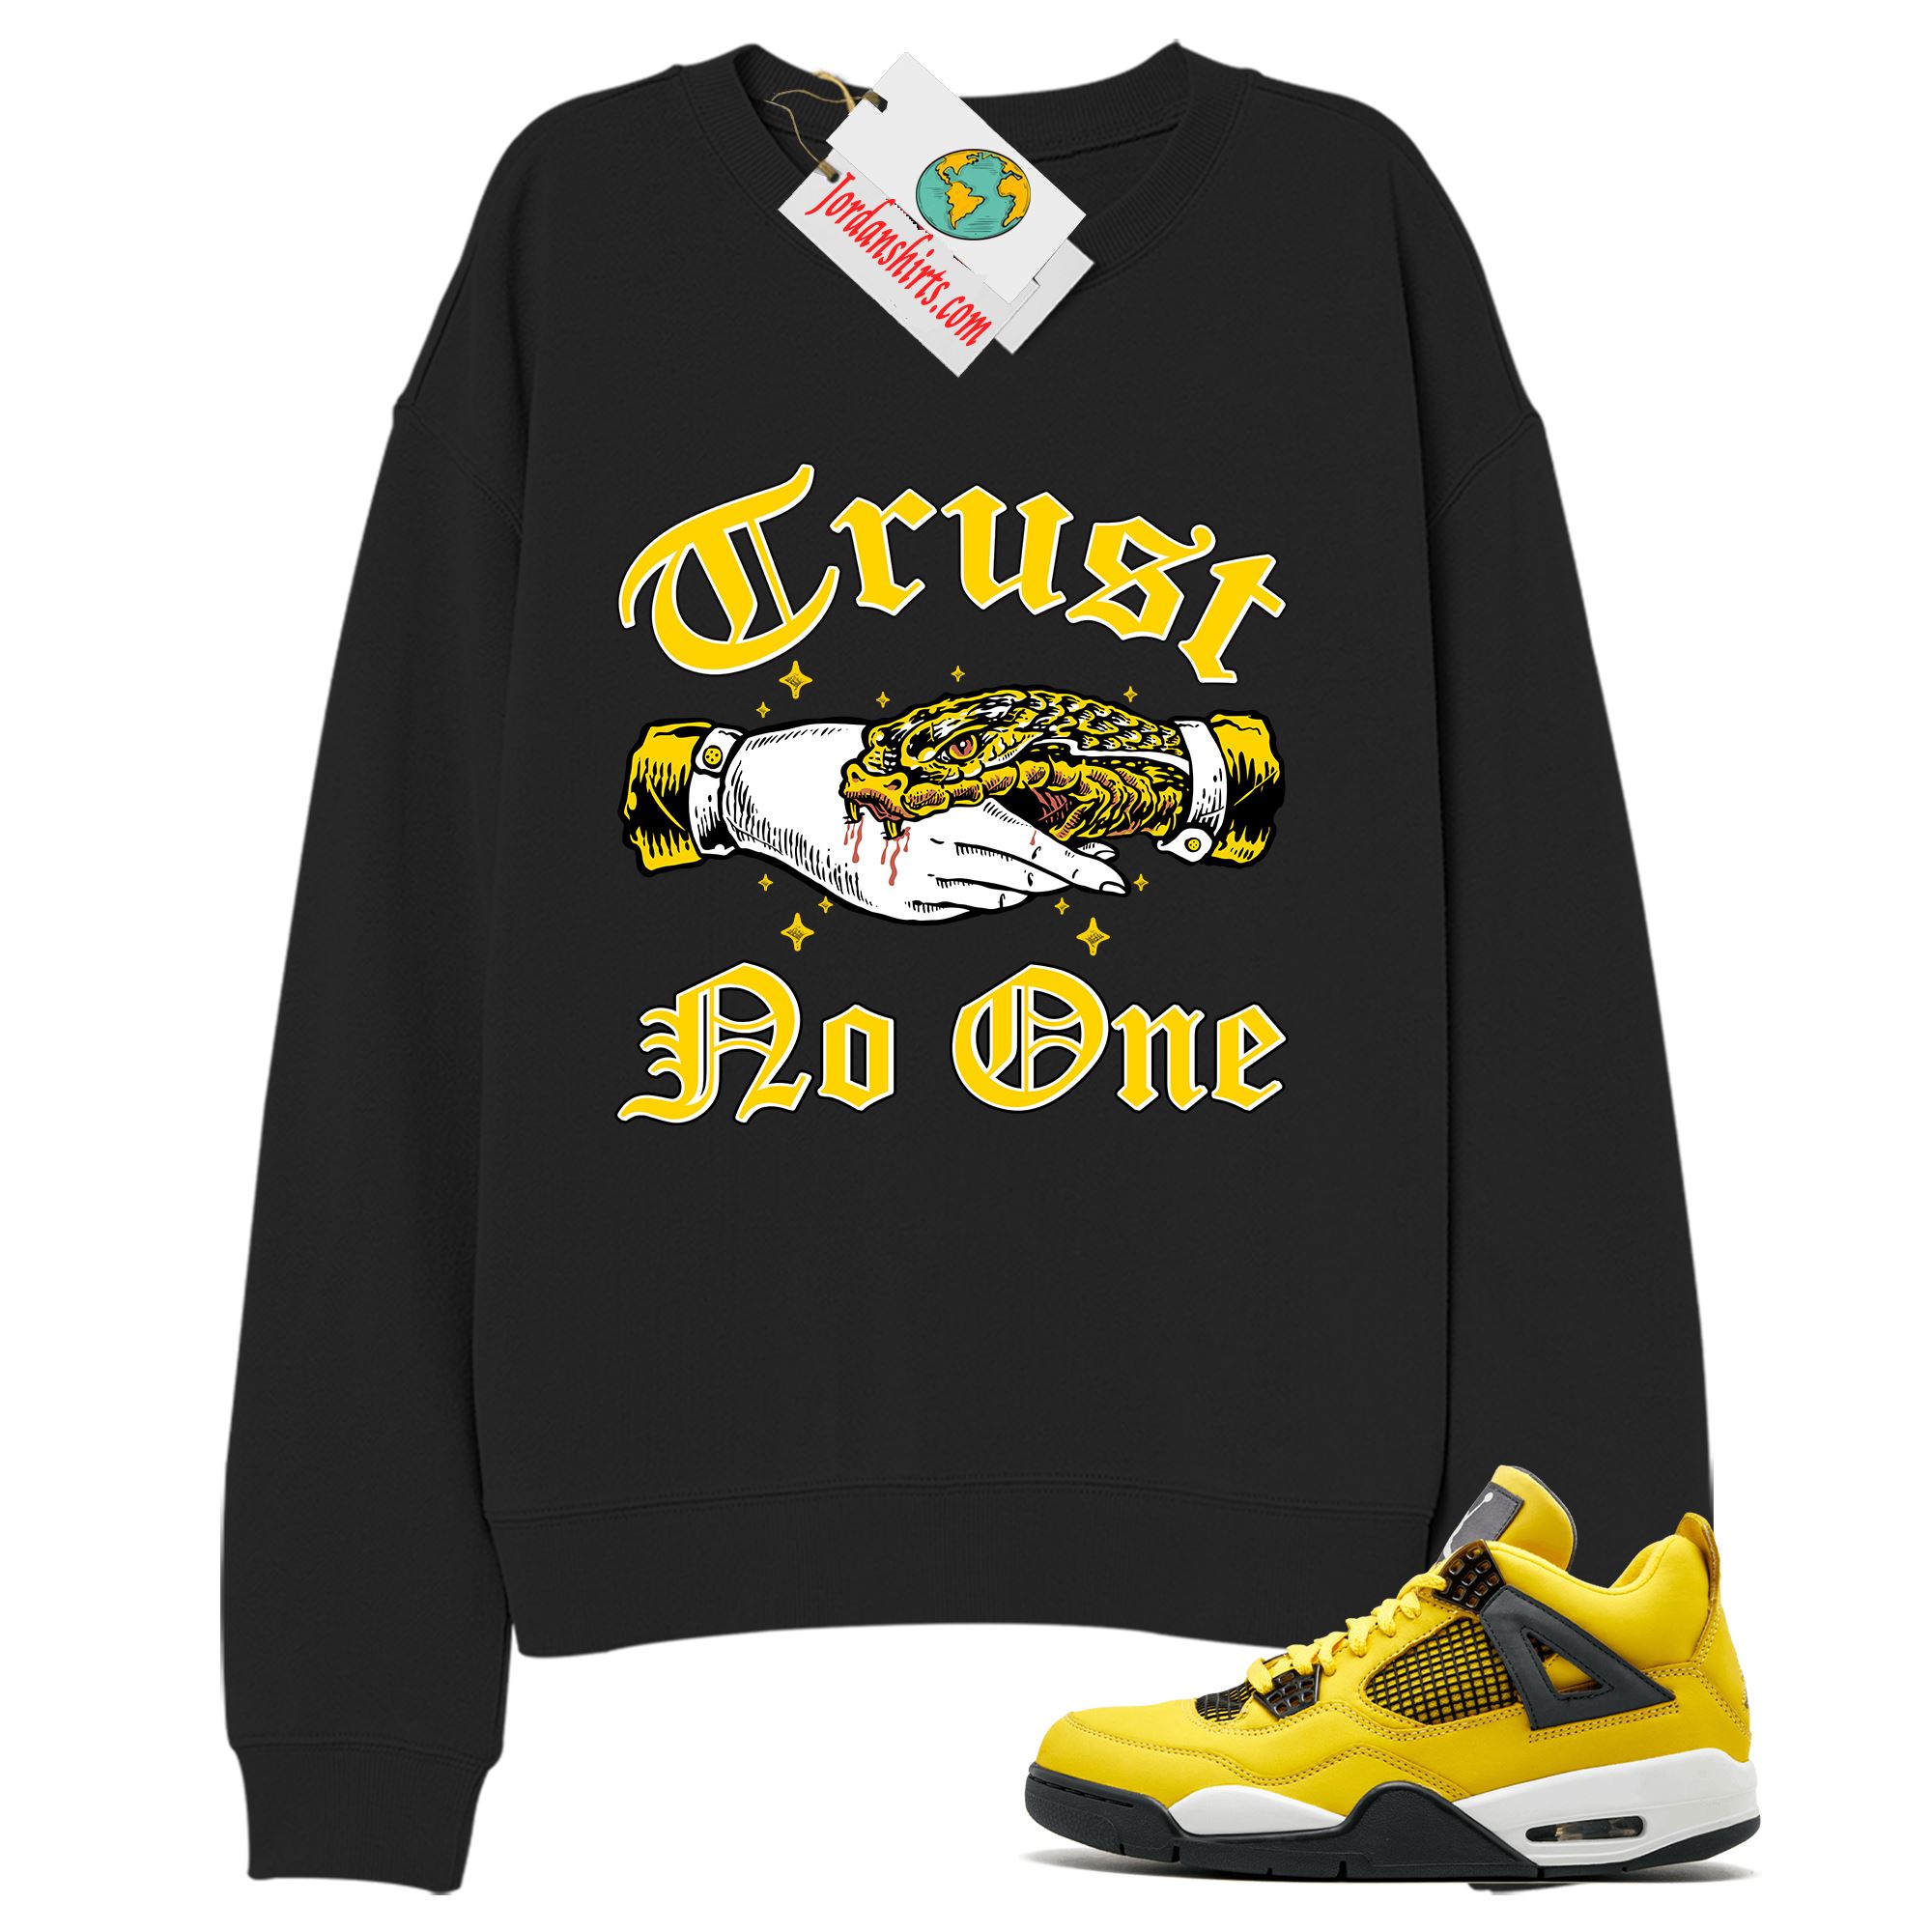 Jordan 4 Sweatshirt, Trust No One Deal With Snake Black Sweatshirt Air Jordan 4 Tour Yellow Lightning 4s Full Size Up To 5xl